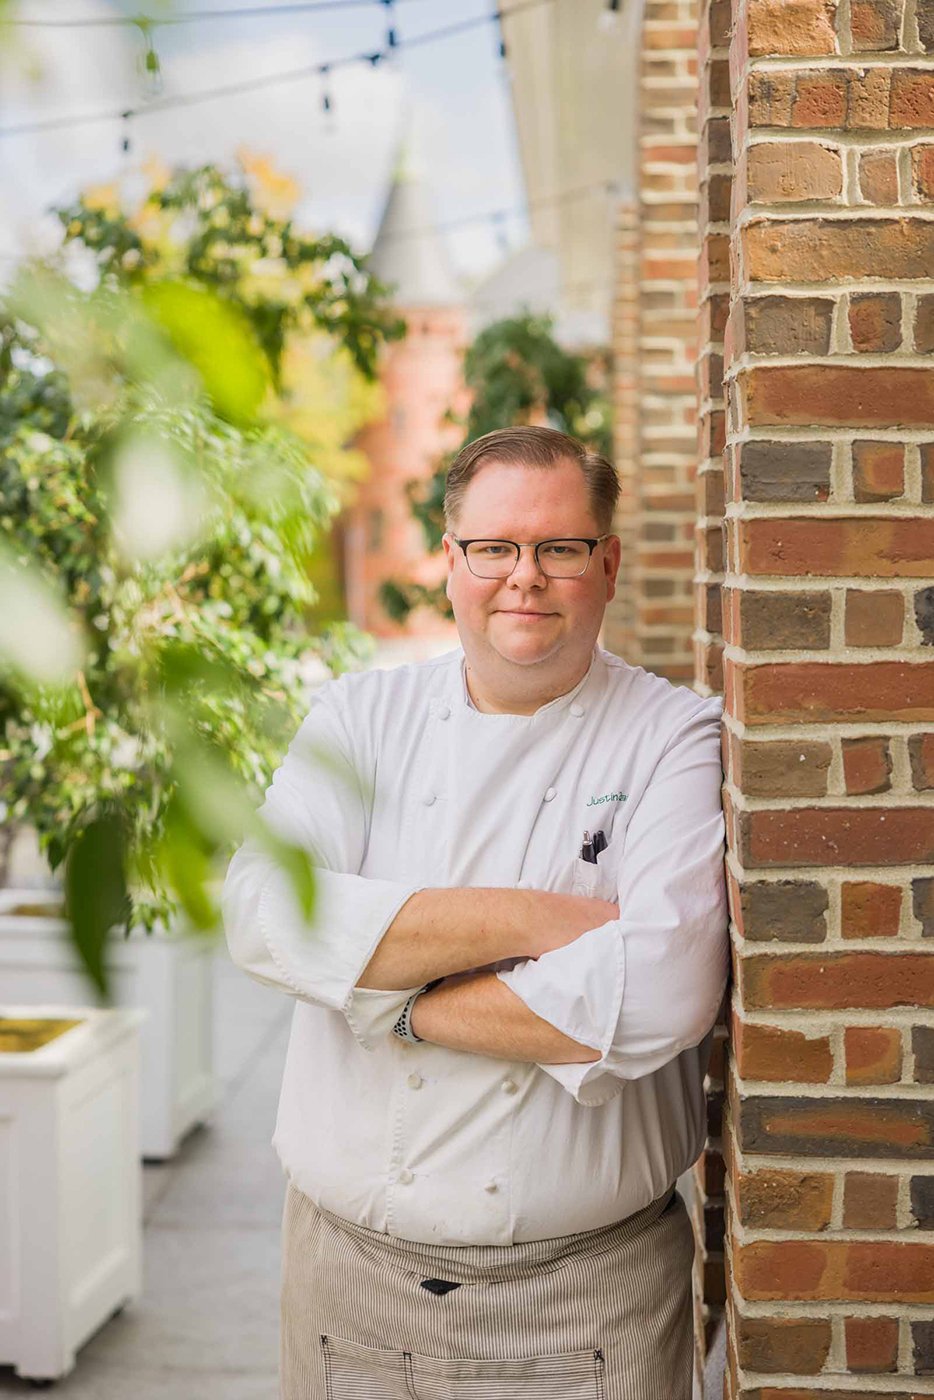 Chef at local Hanover restaurant shot by Oliver Parini for Yankee Magazine